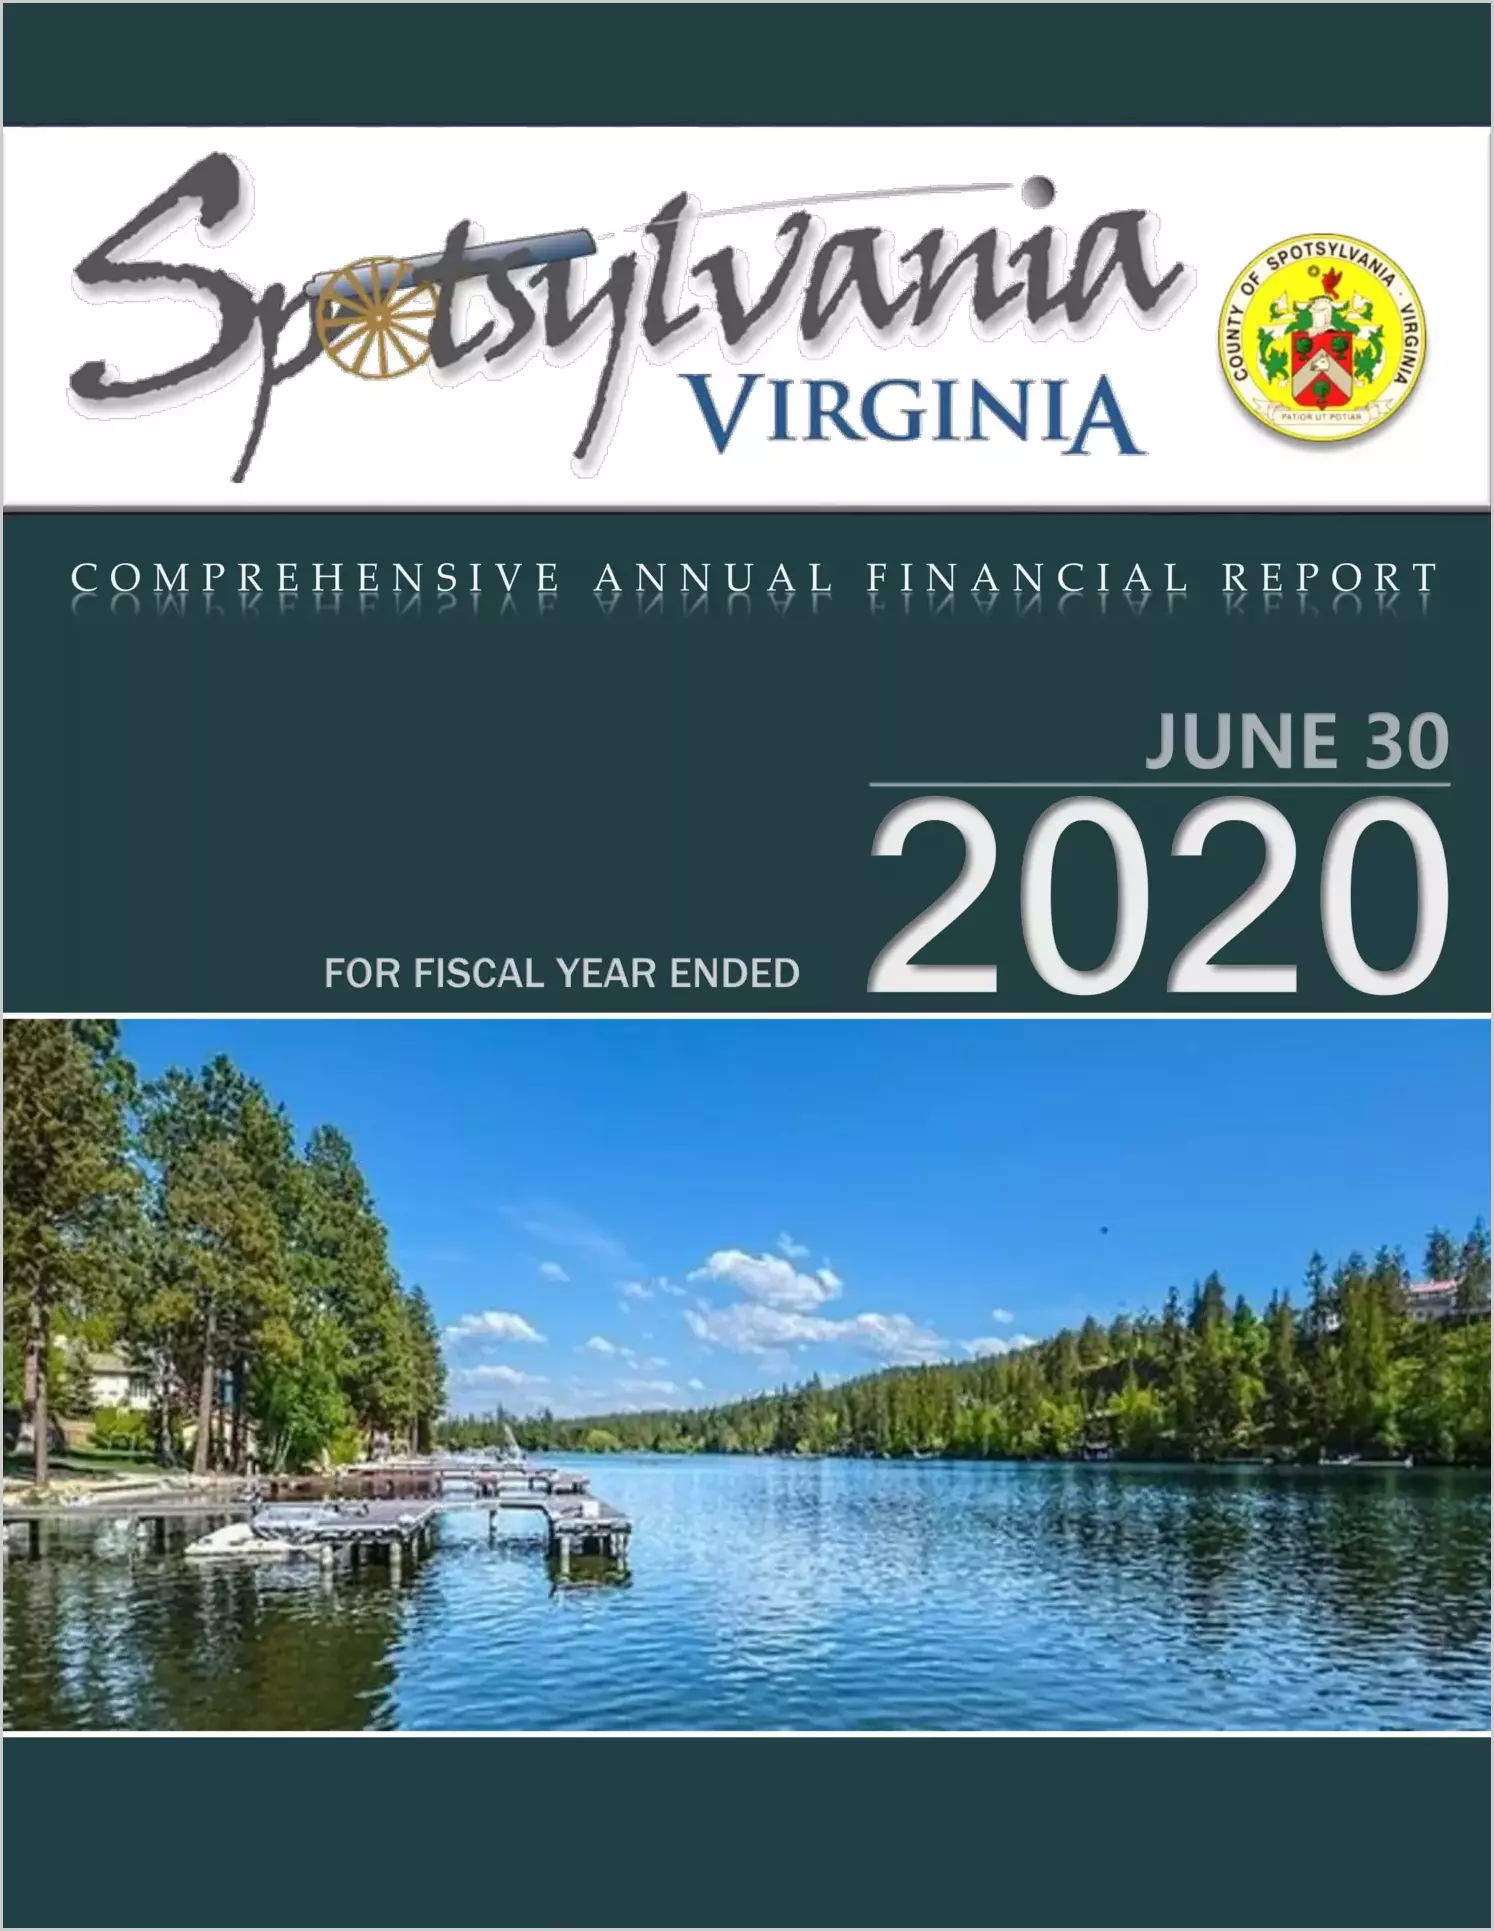 2020 Annual Financial Report for County of Spotsylvania